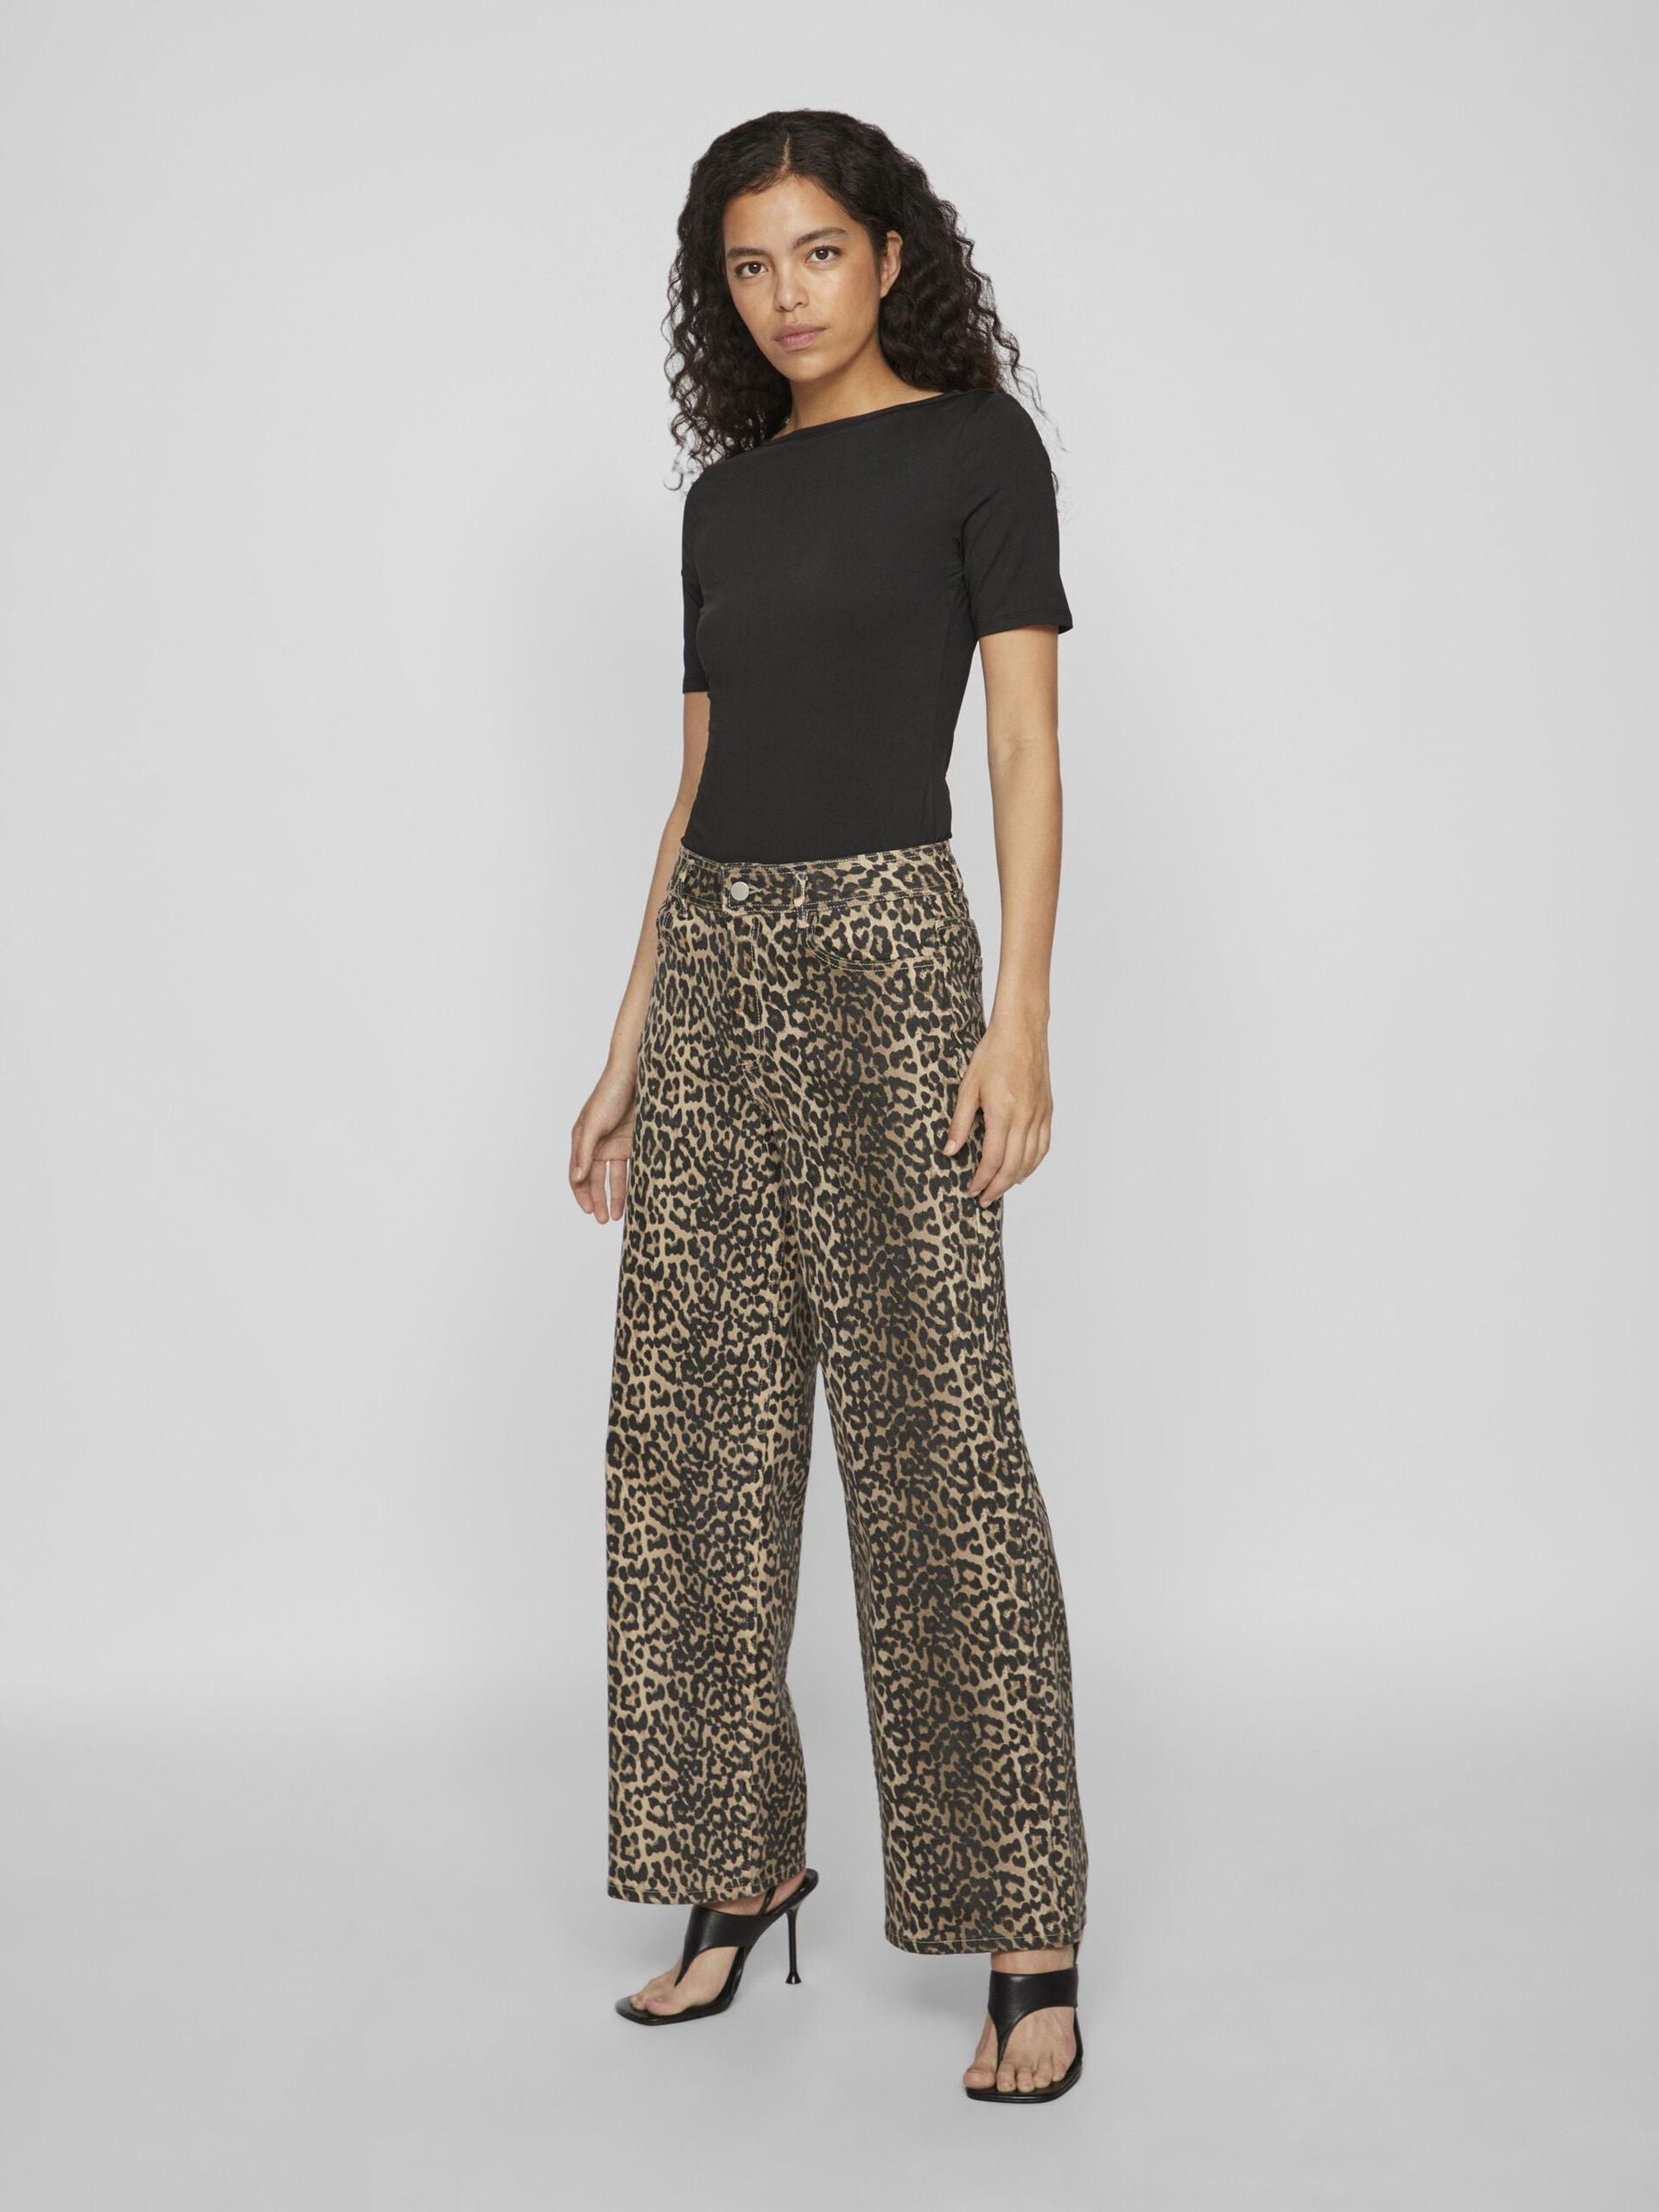 Ciara Leopard Print Jeans (Birch)